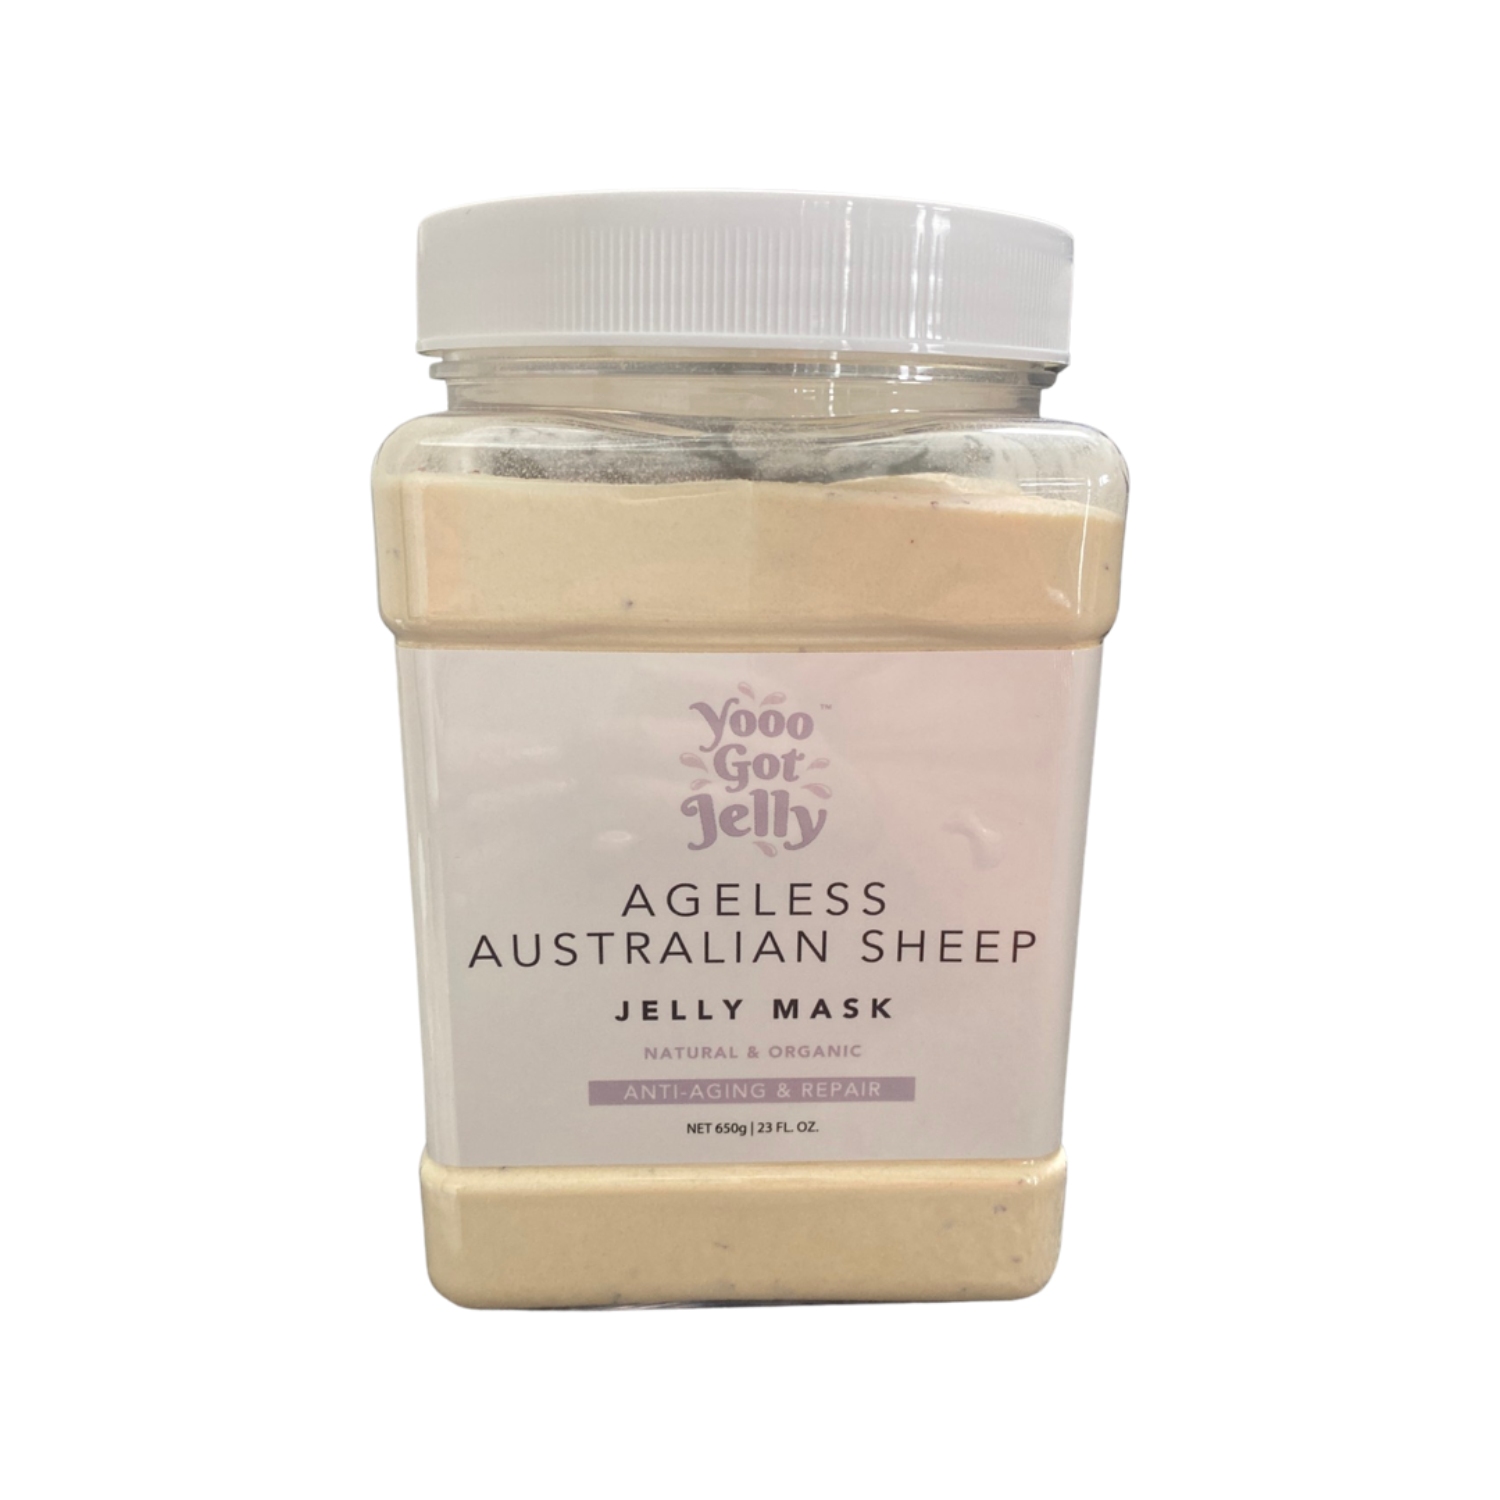 AGELESS AUSTRALIAN SHEEP JELLY MASK - Anti-Aging & Repairing